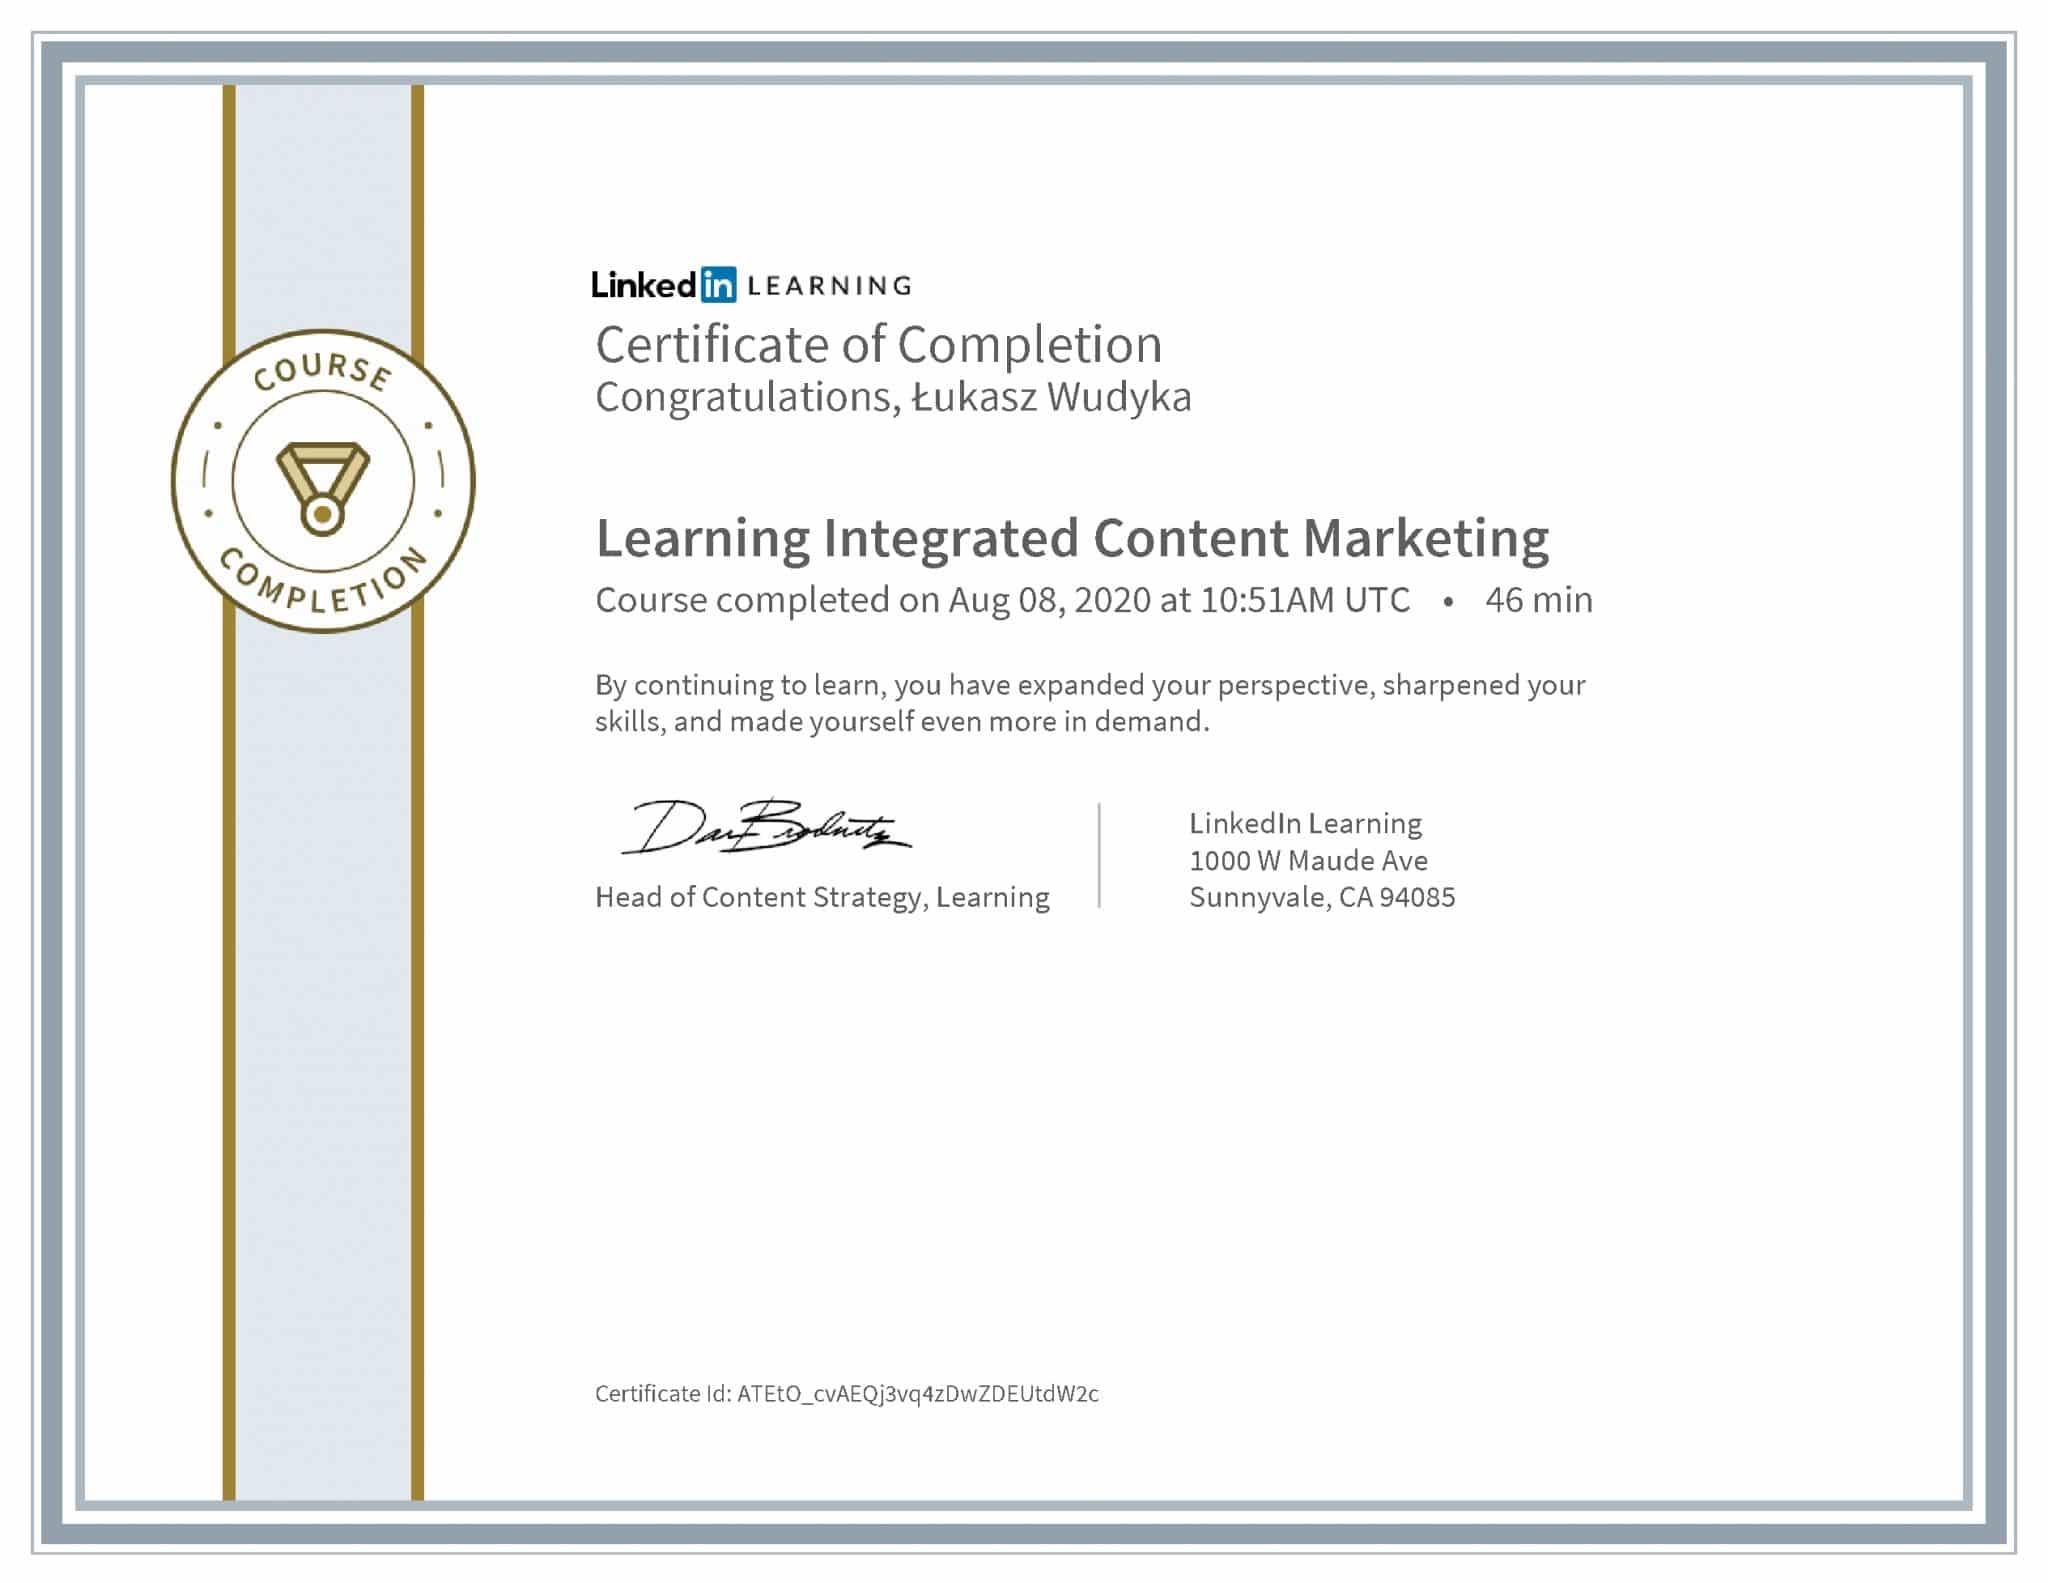 Łukasz Wudyka certyfikat LinkedIn Learning Integrated Content Marketing